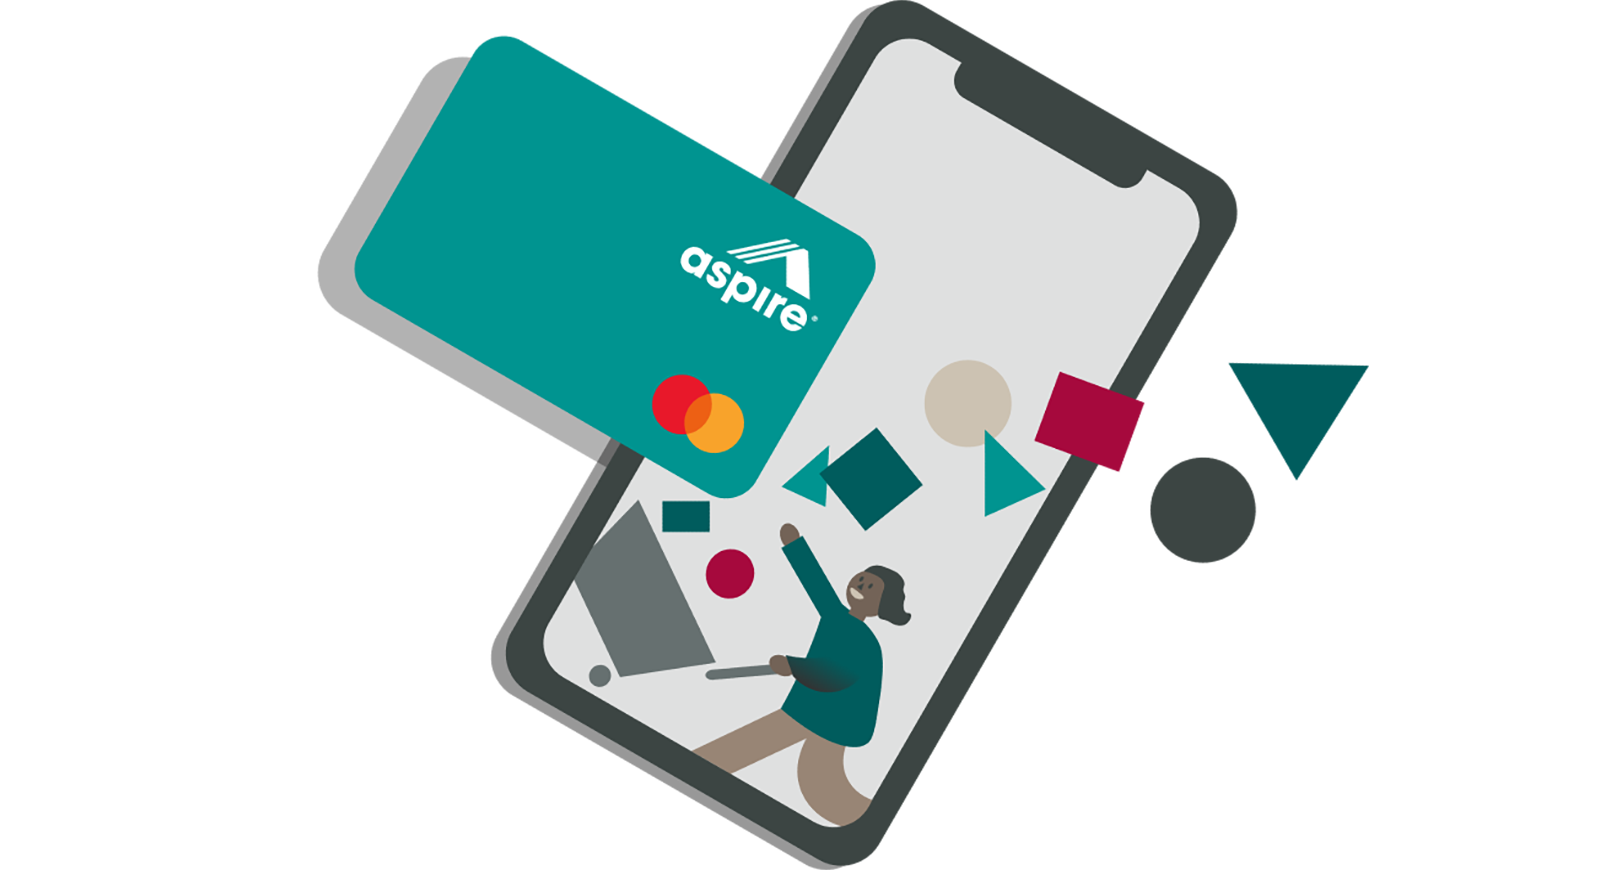 Aspire Credit Card and phone